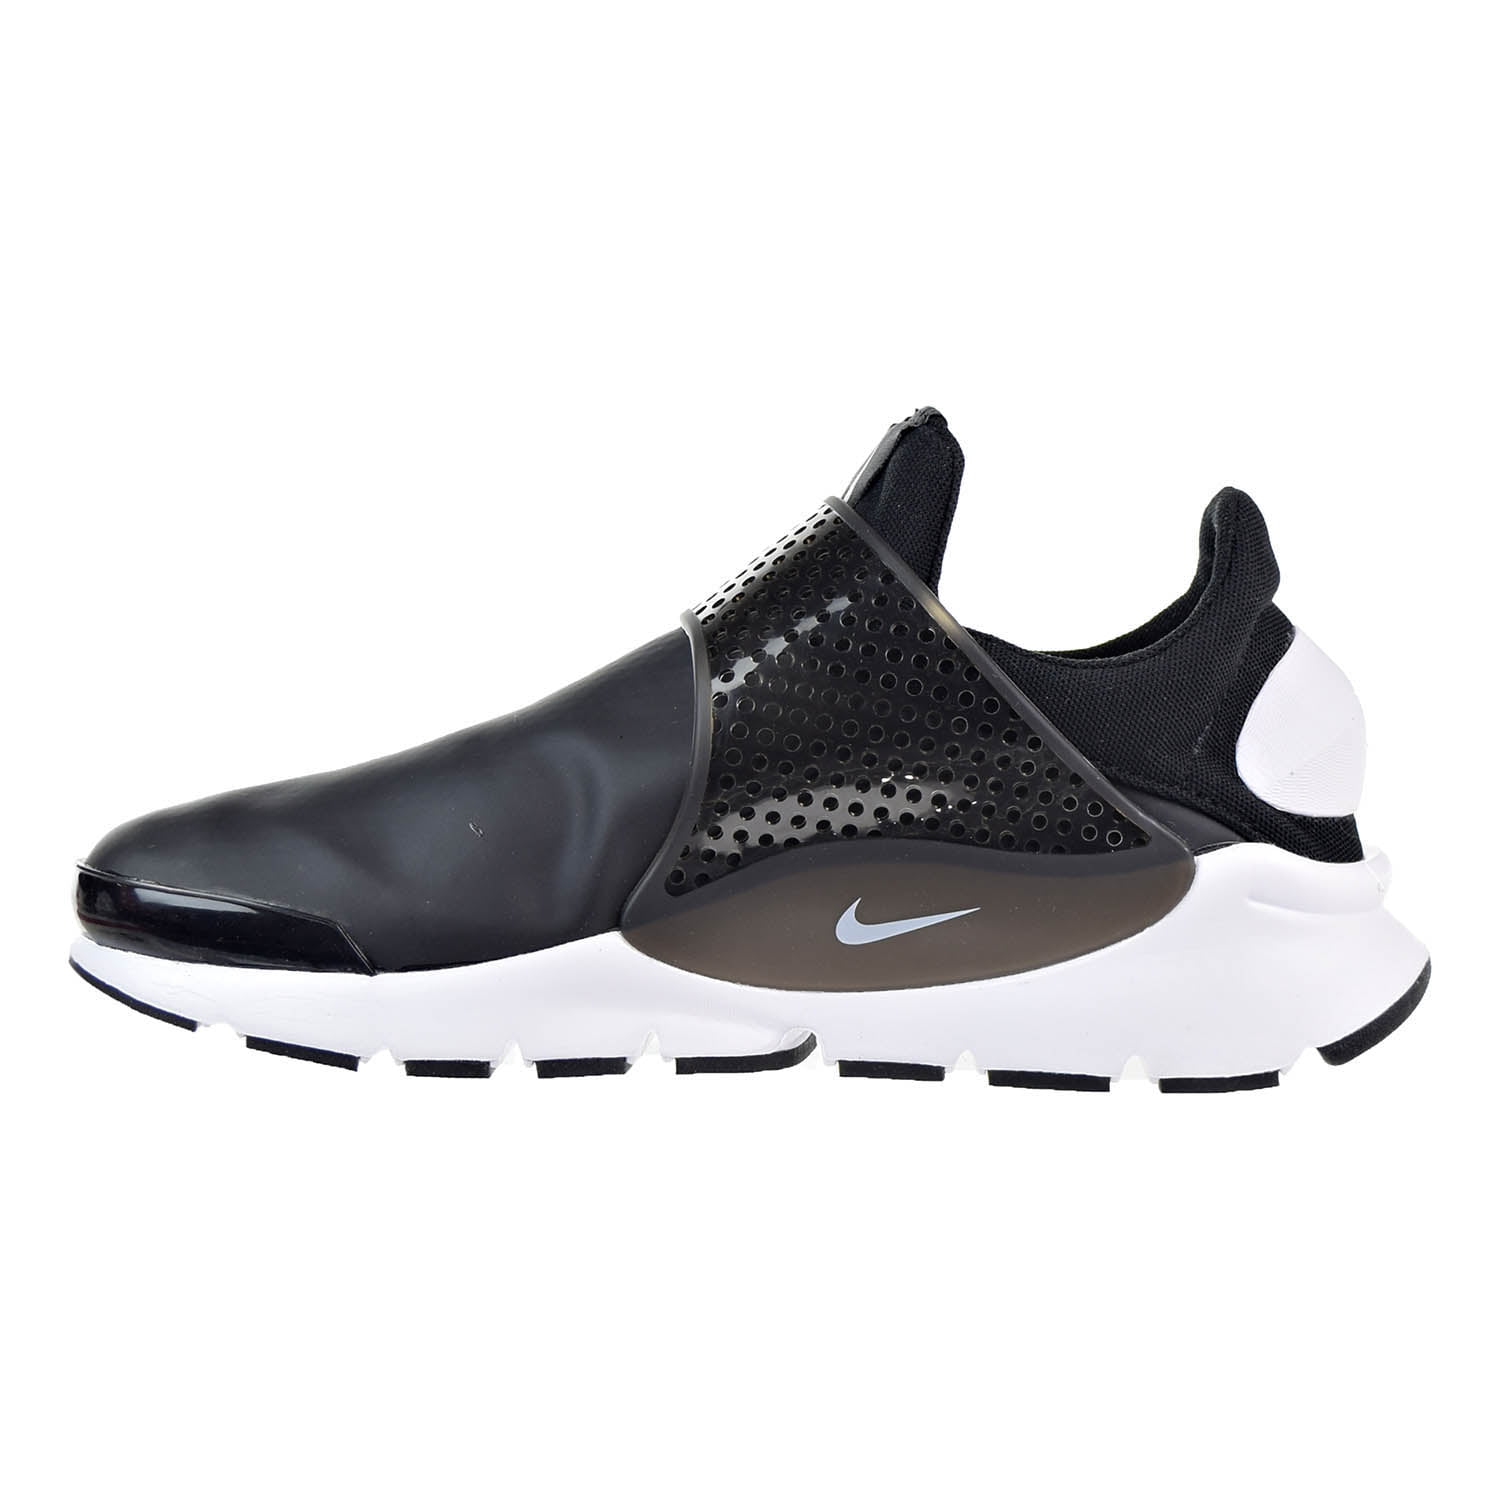 Nike Sock Dart SE Men's Shoe Black/White 911404-001 - Walmart.com